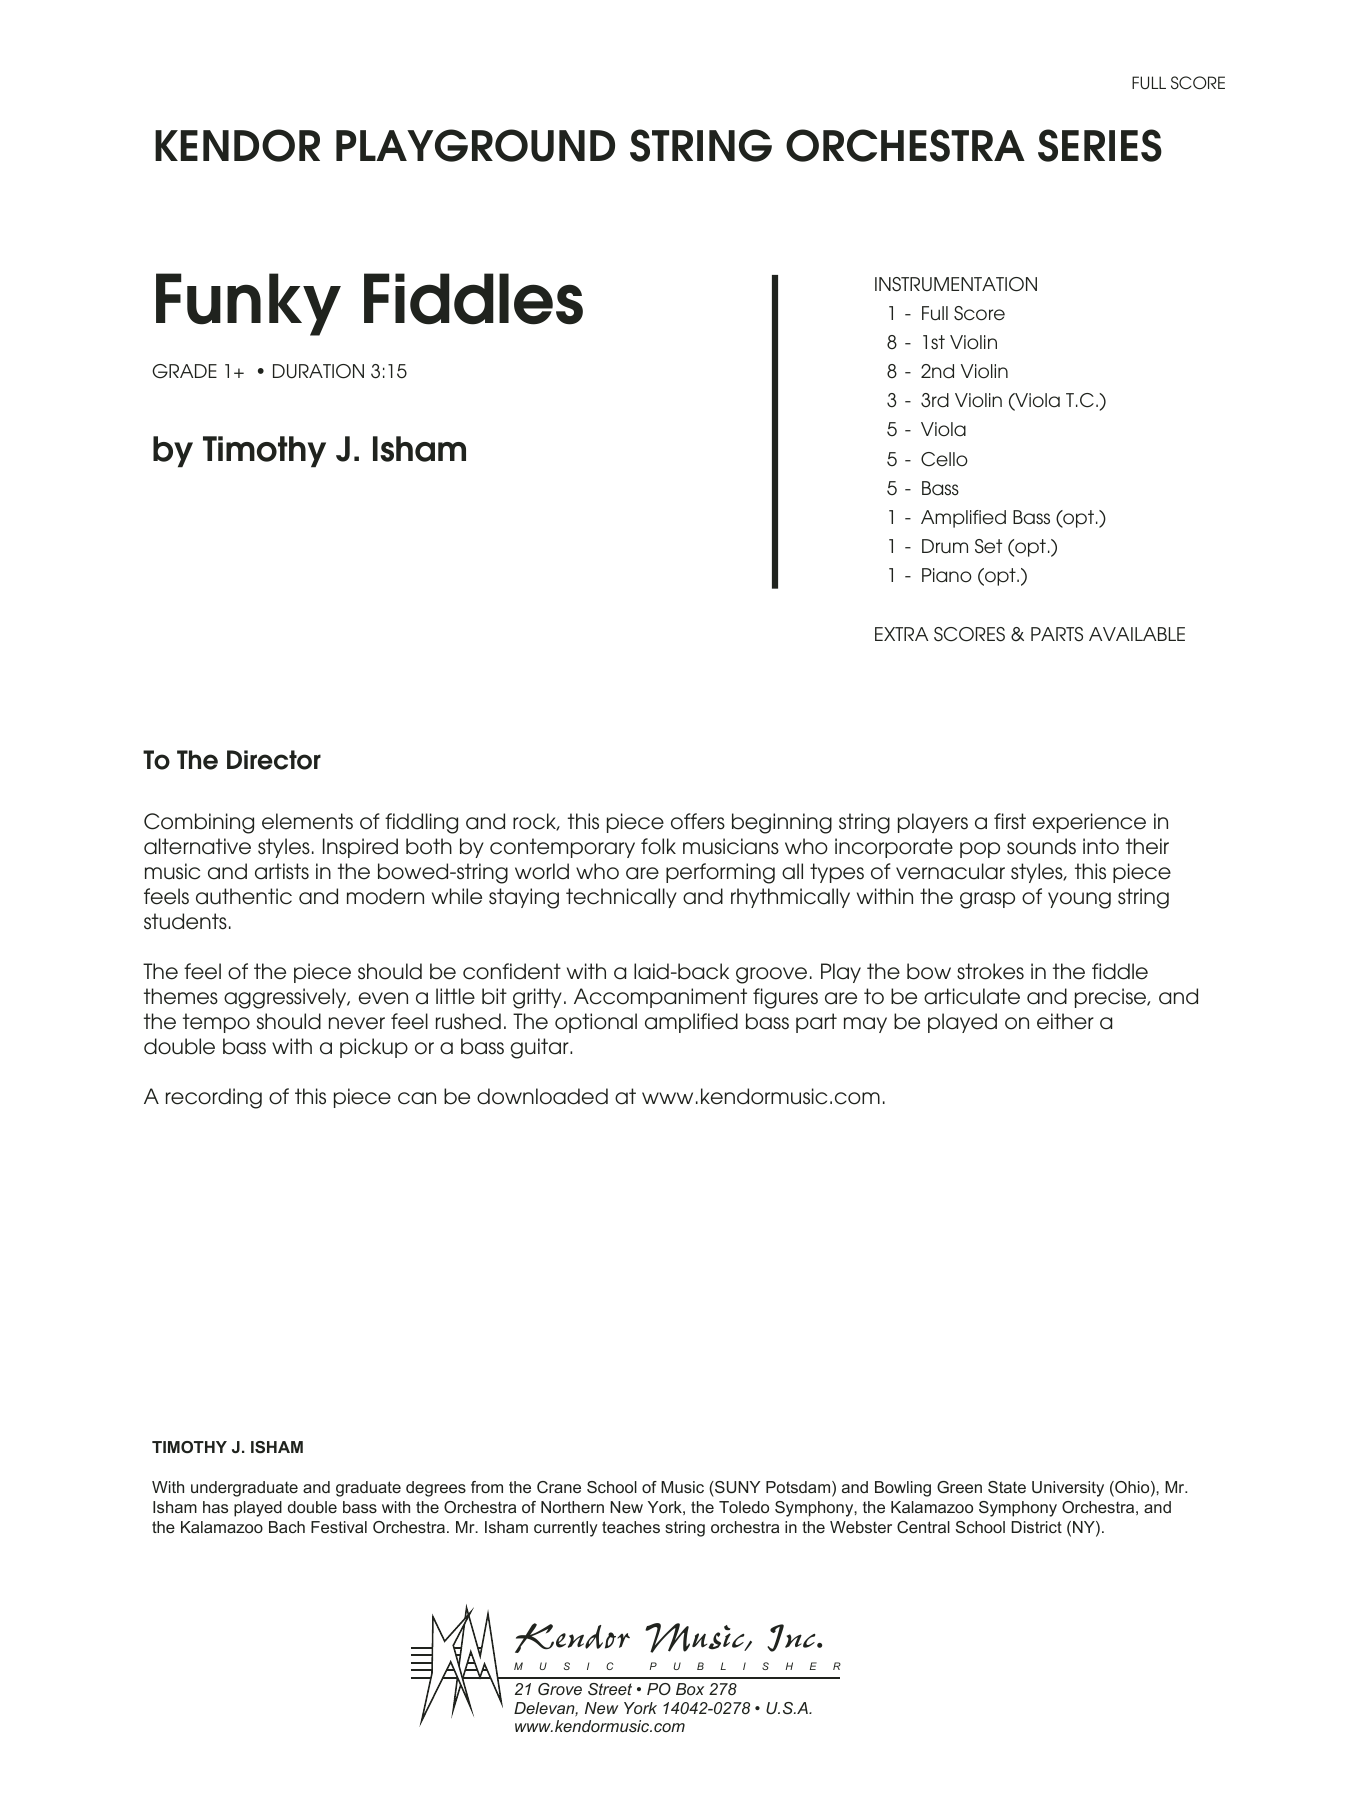 Download Timothy Isham Funky Fiddles - Full Score Sheet Music